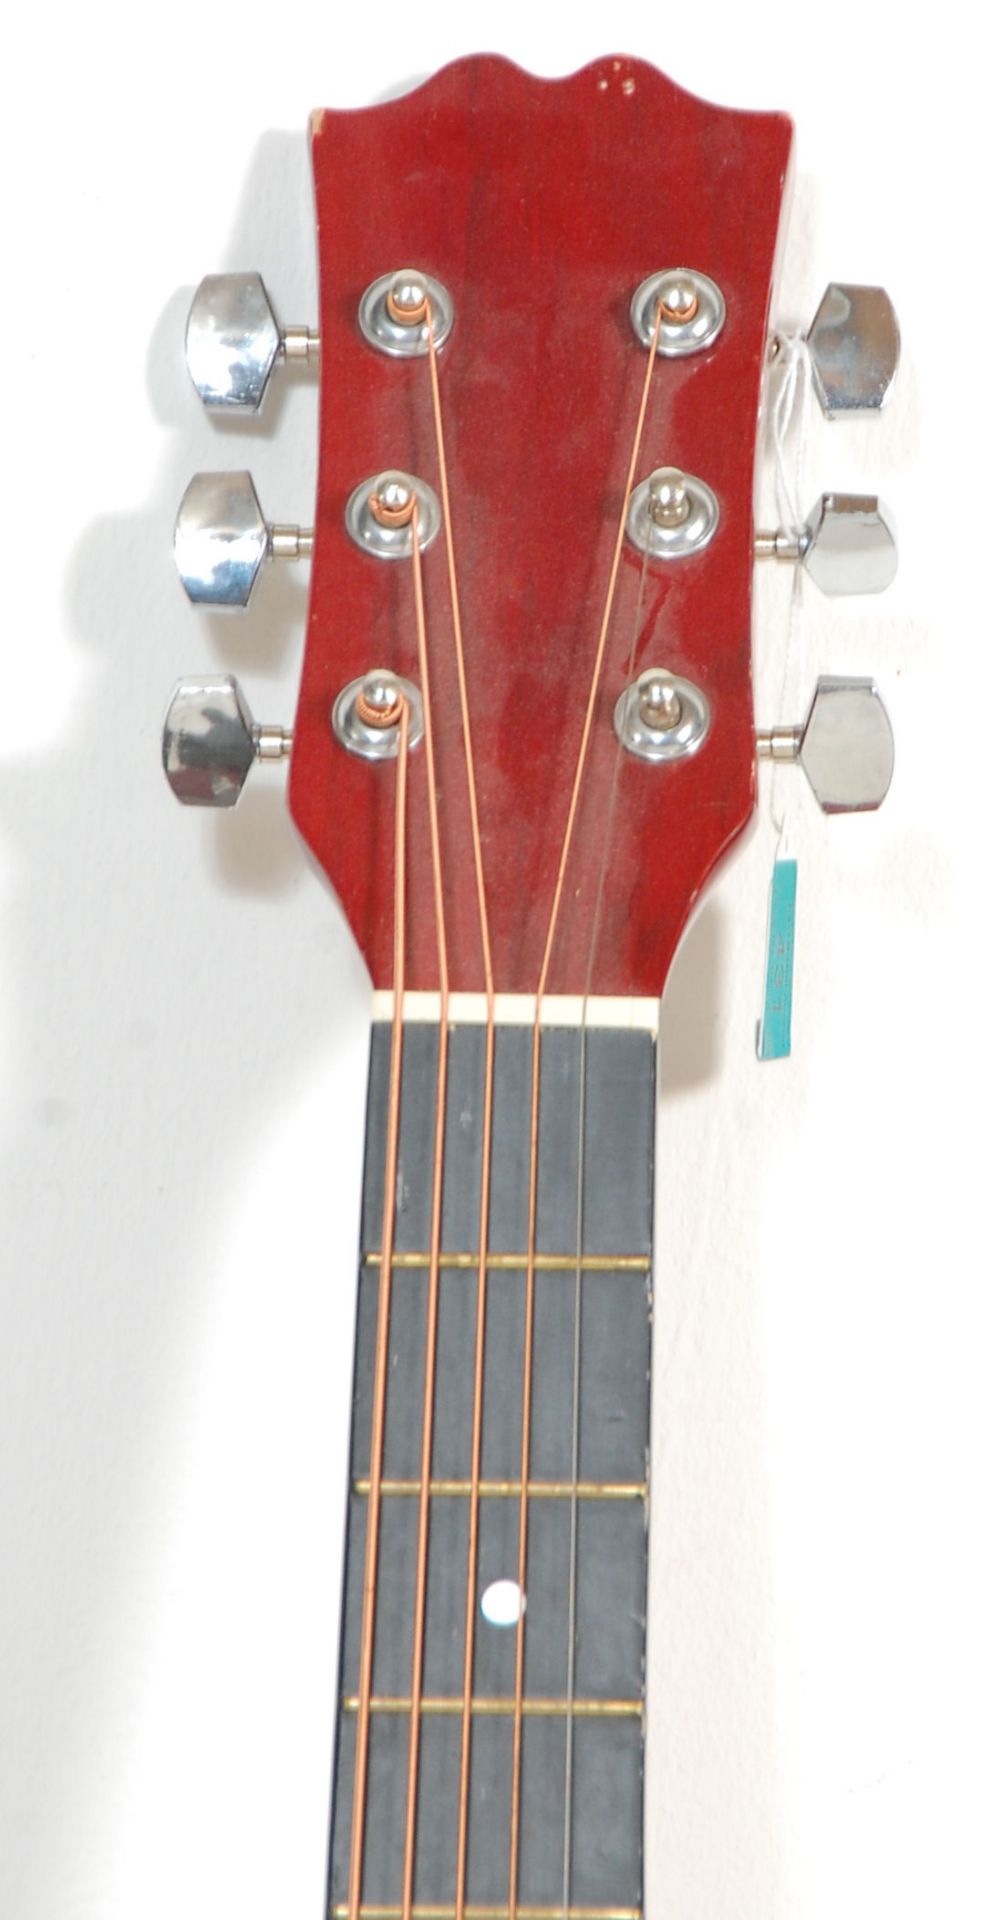 A vintage six string acoustic guitar having an inl - Bild 4 aus 6